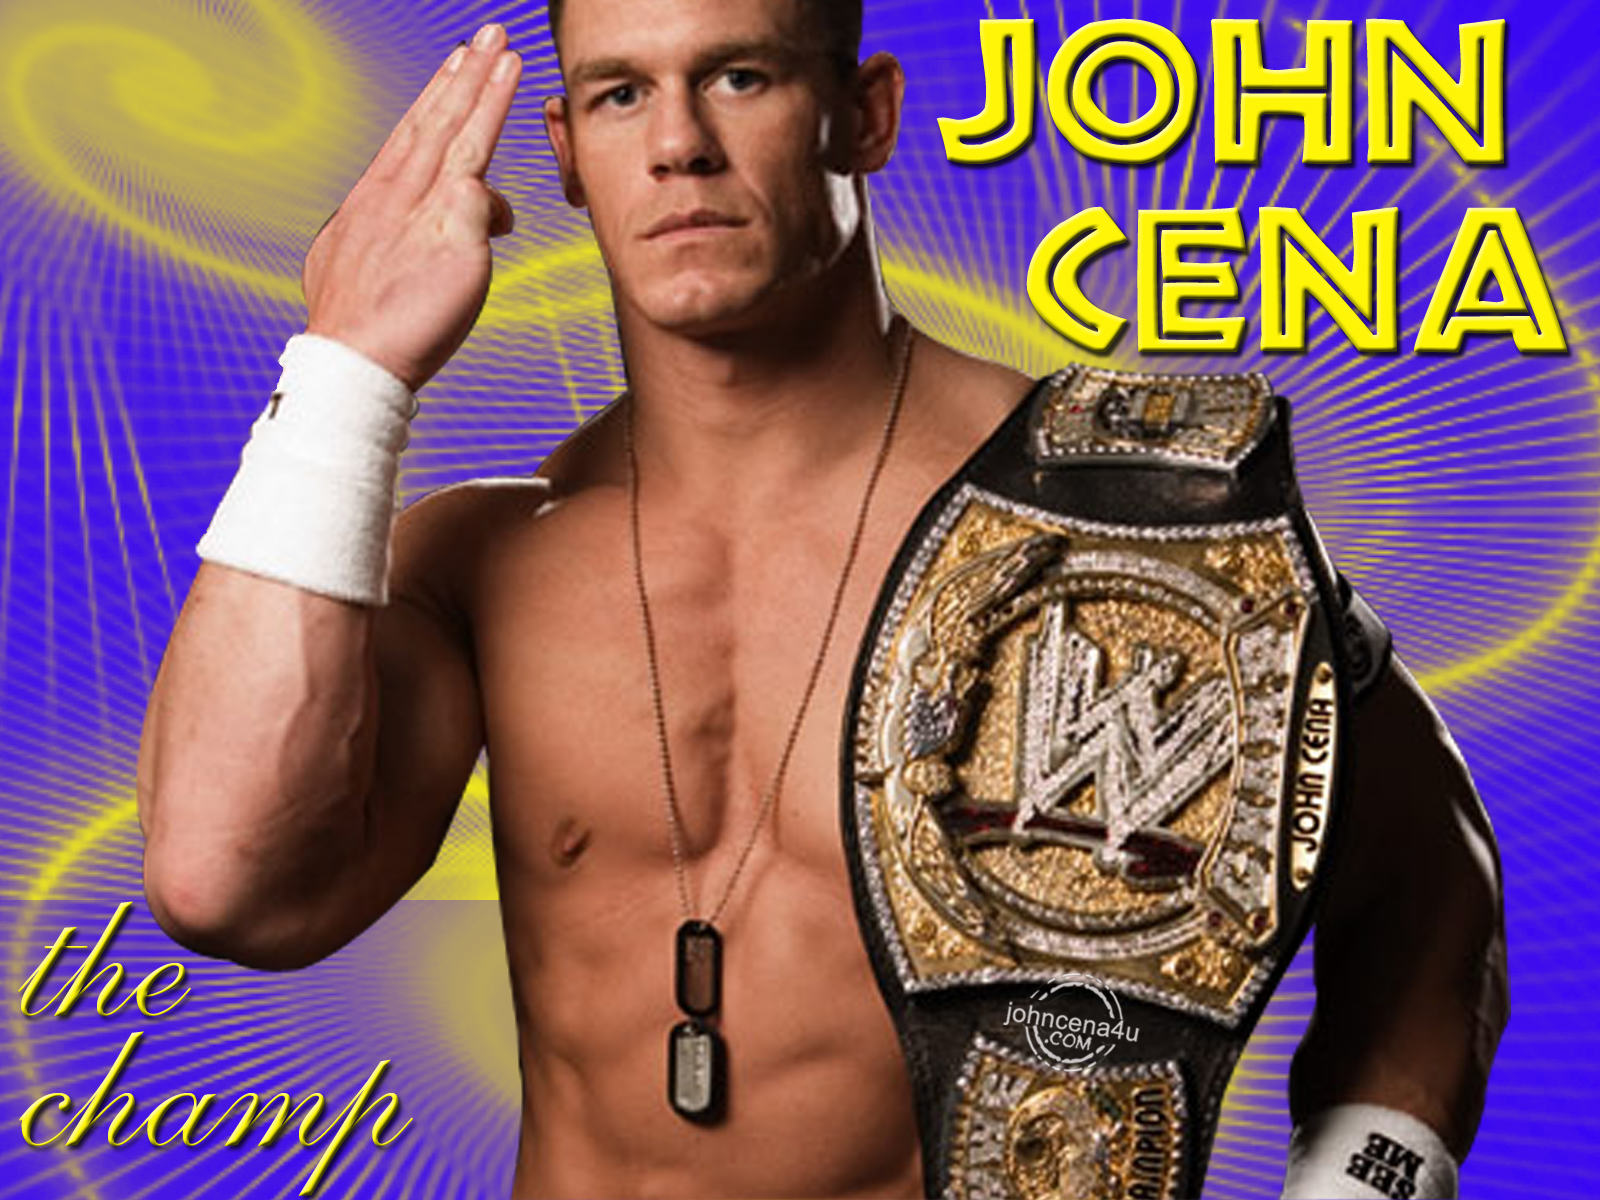 Free Download John Cena 2012 Wallpaper Hq 480p Free Download Wallpaper